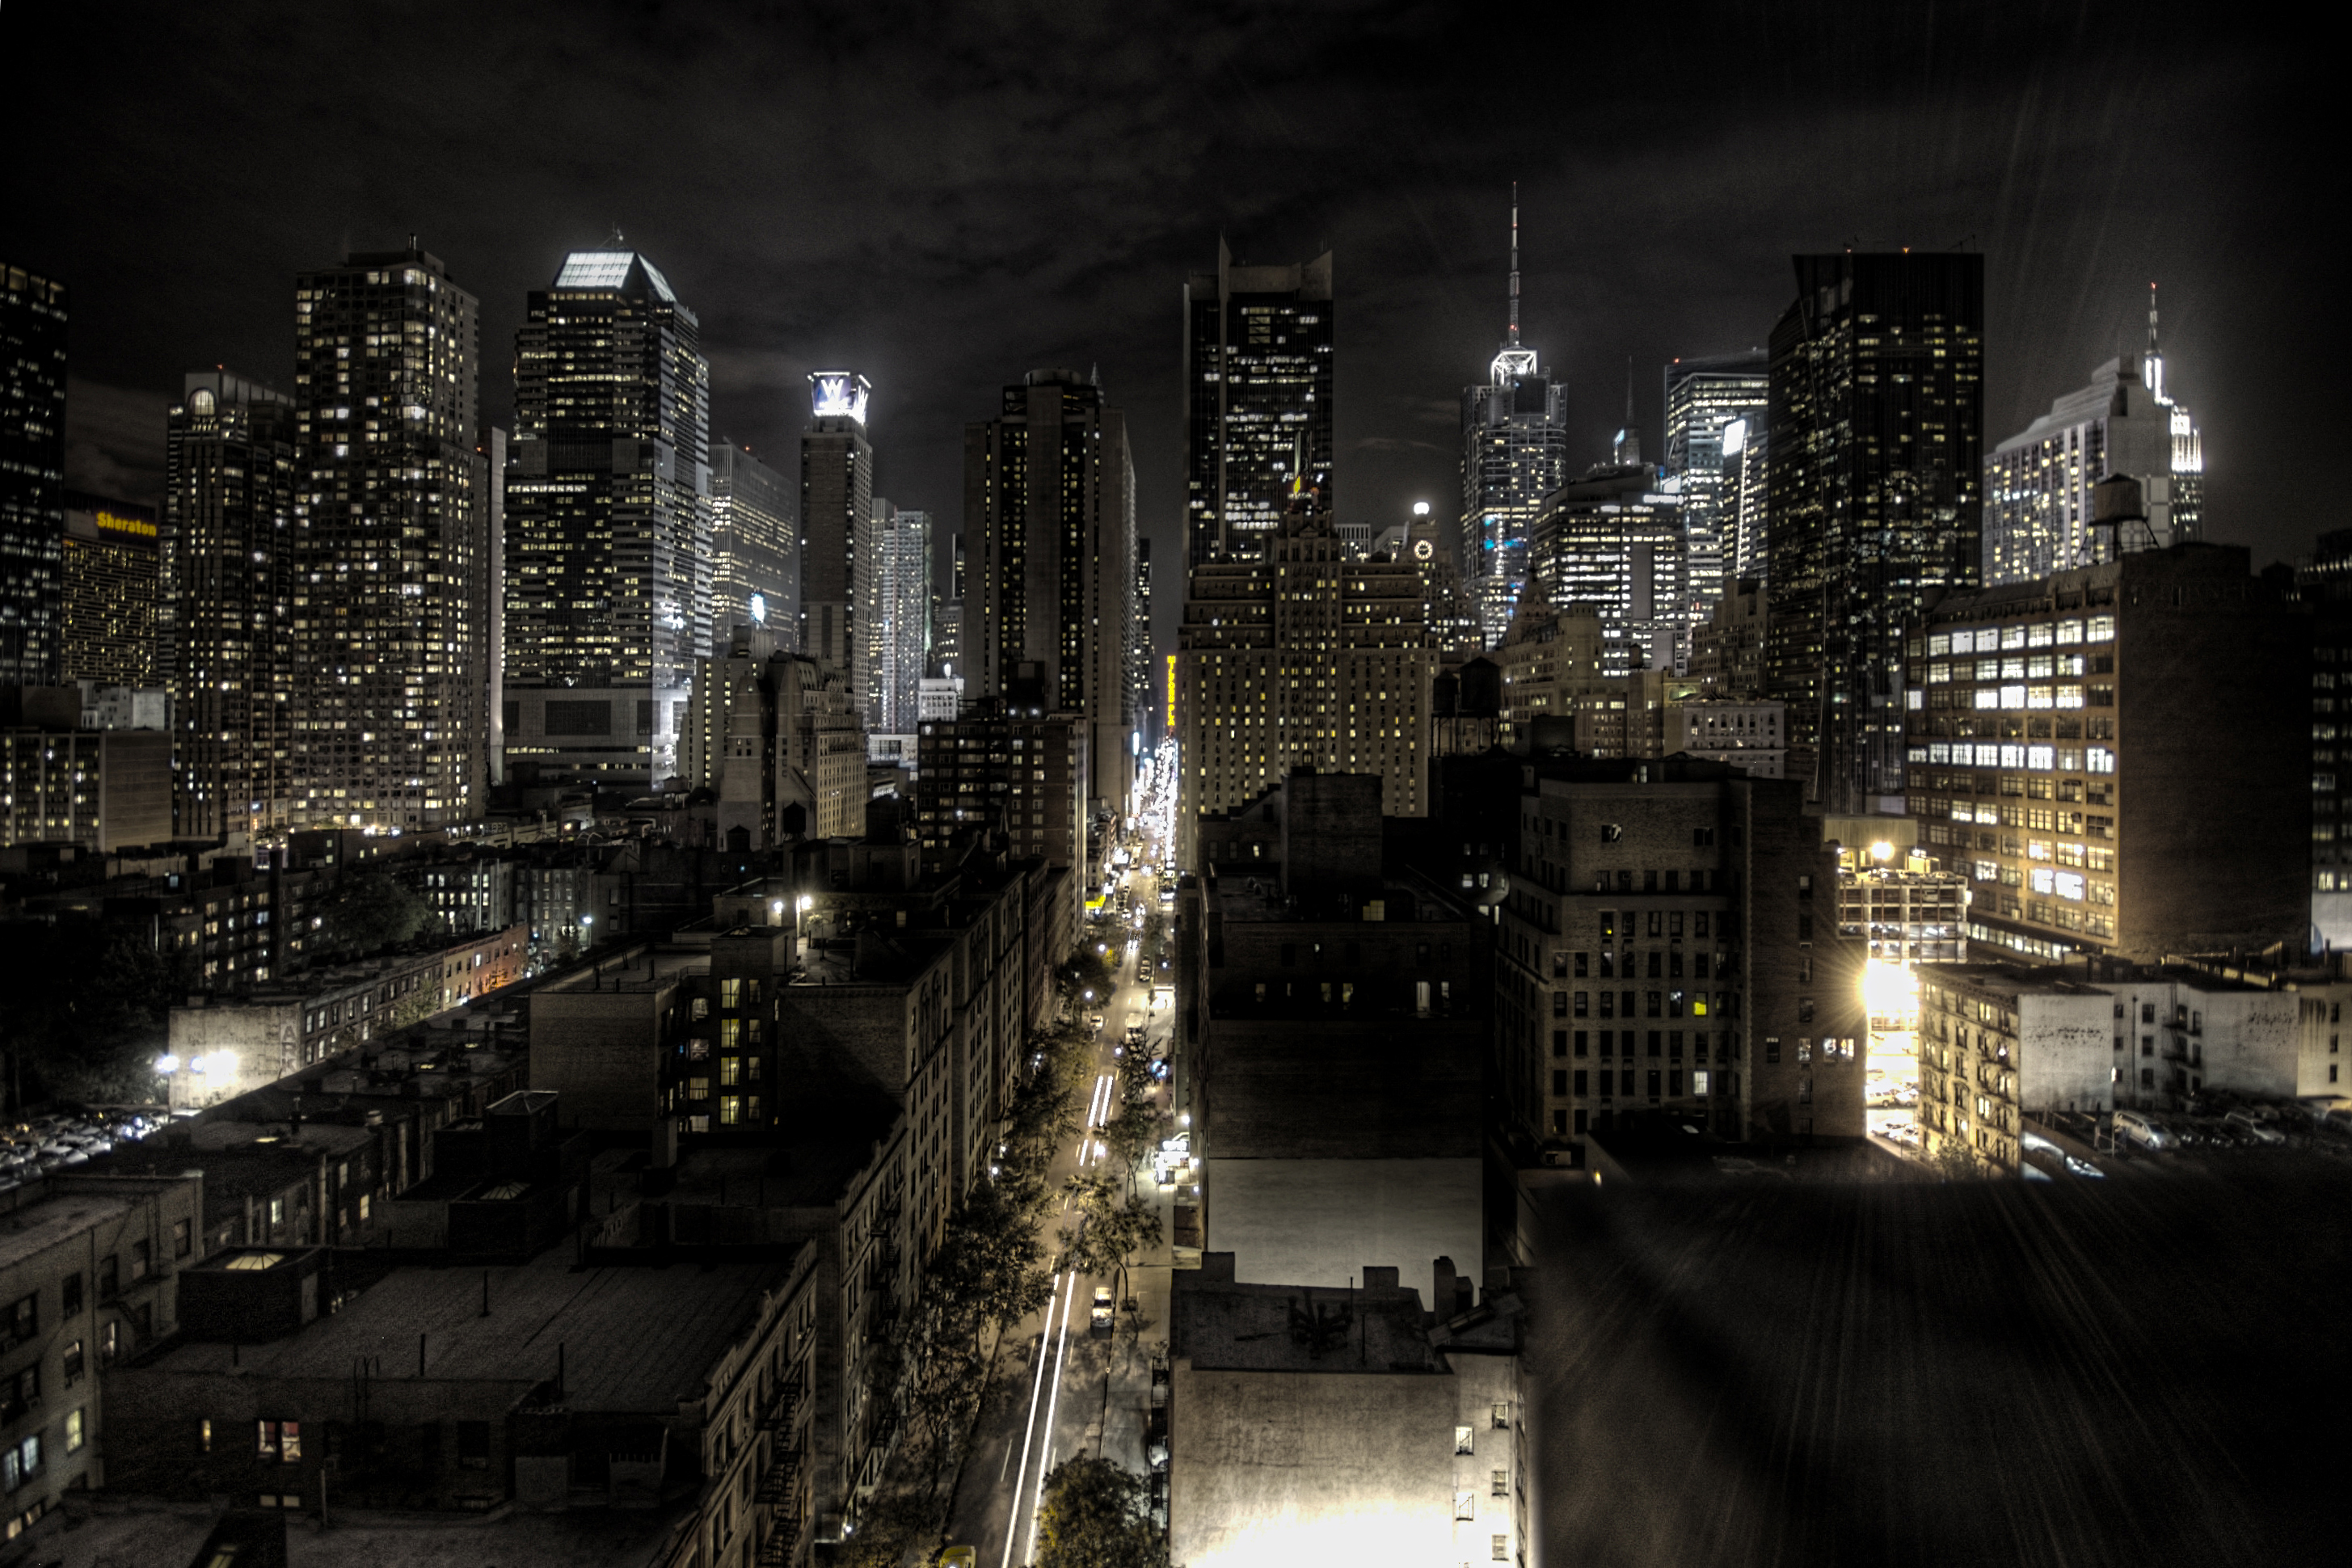 New_York_City_at_night_HDR_edit1.jpg